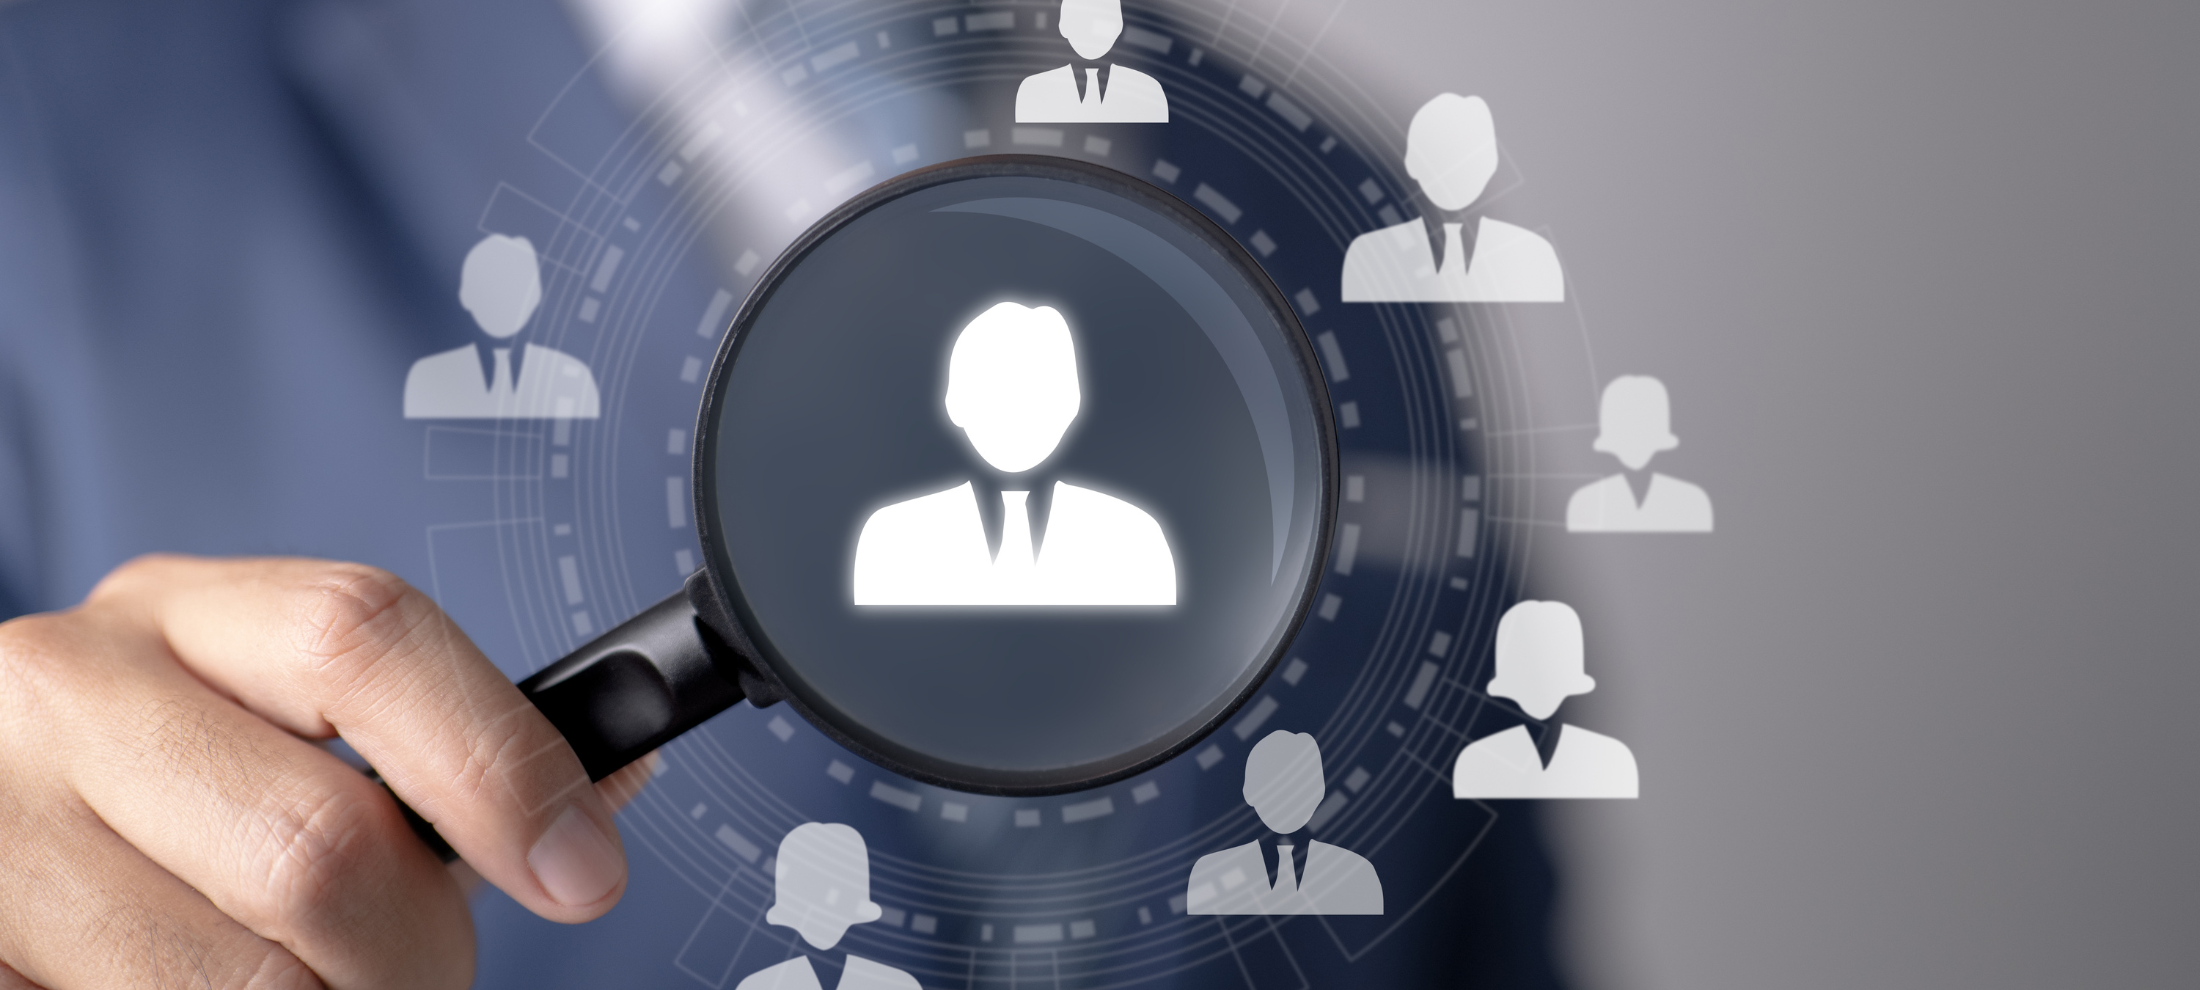 A recruiter streamlining hiring using recruitment automation software